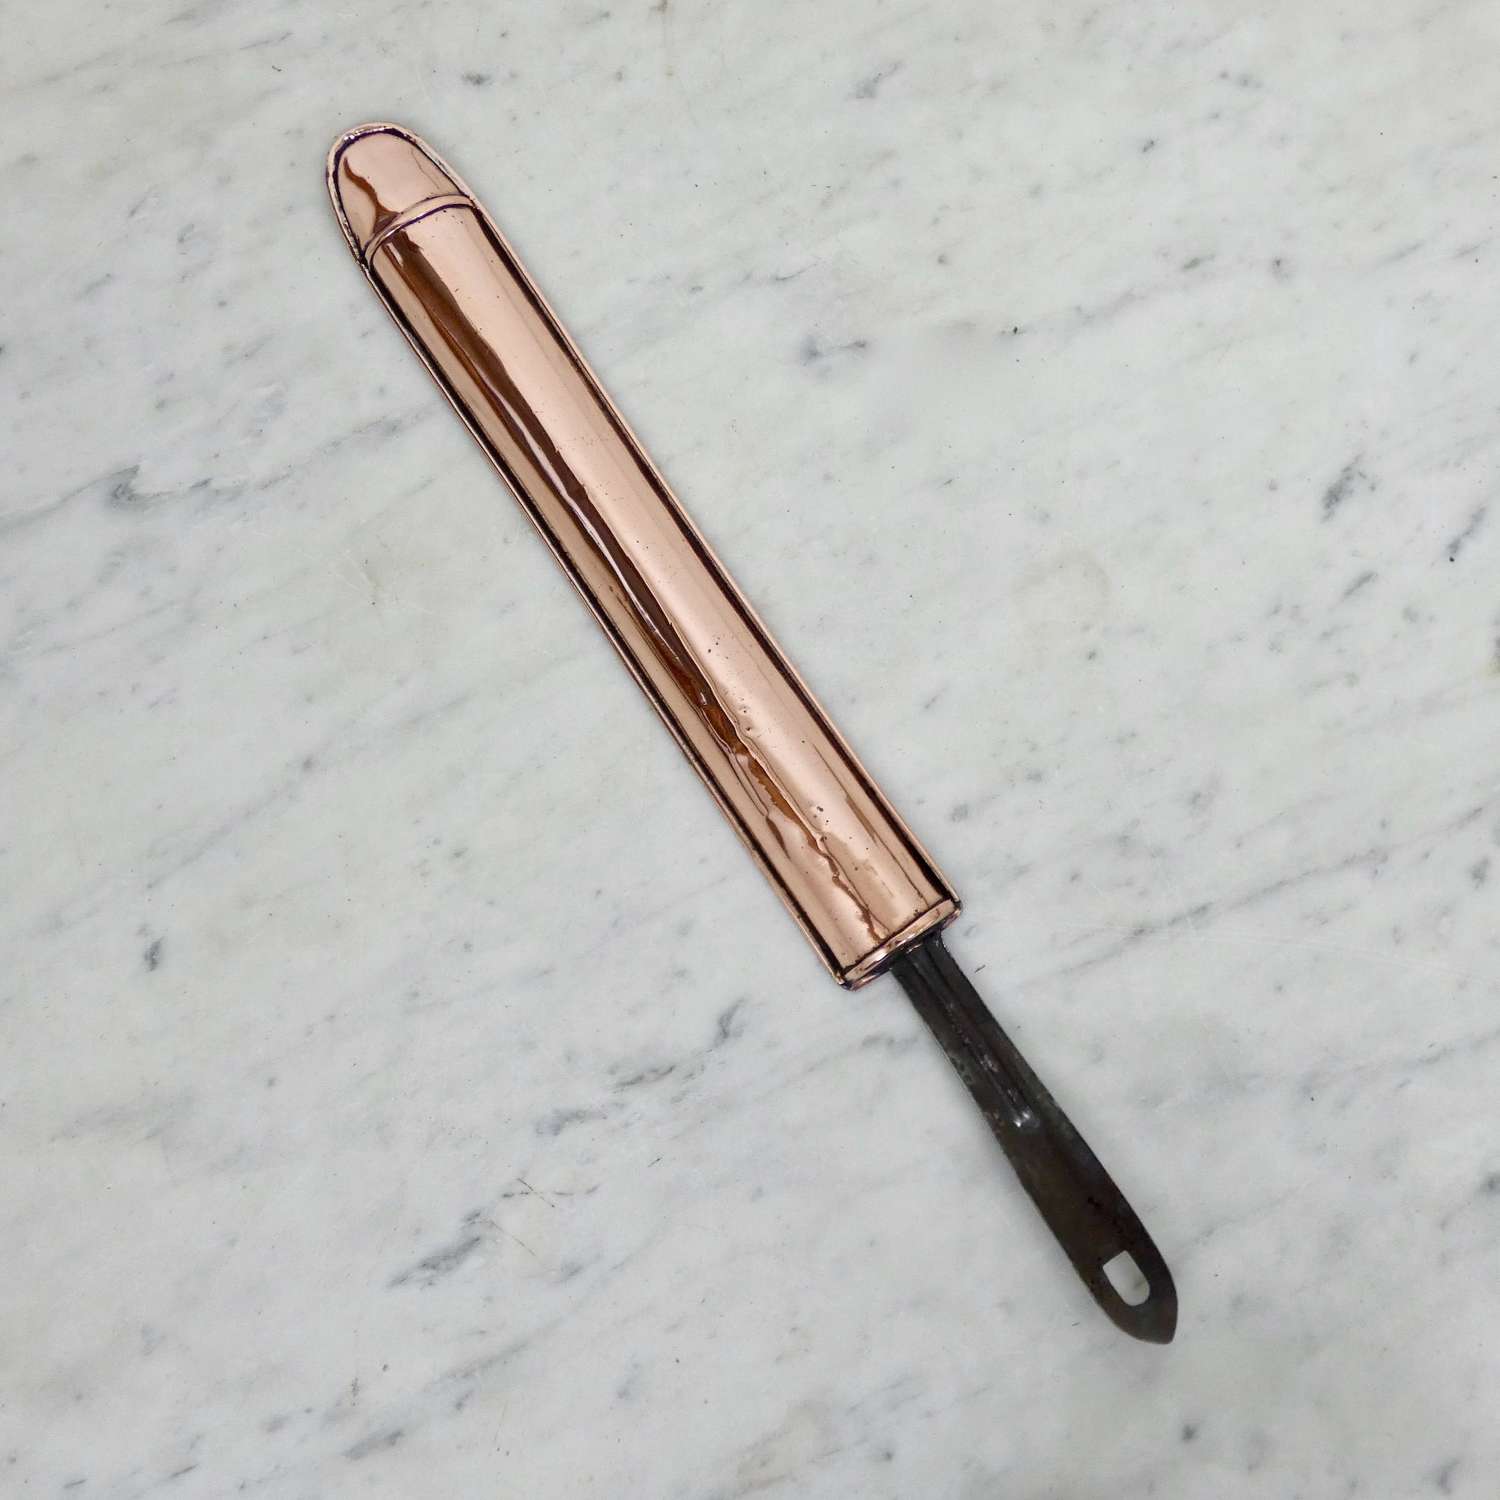 Copper basting tool